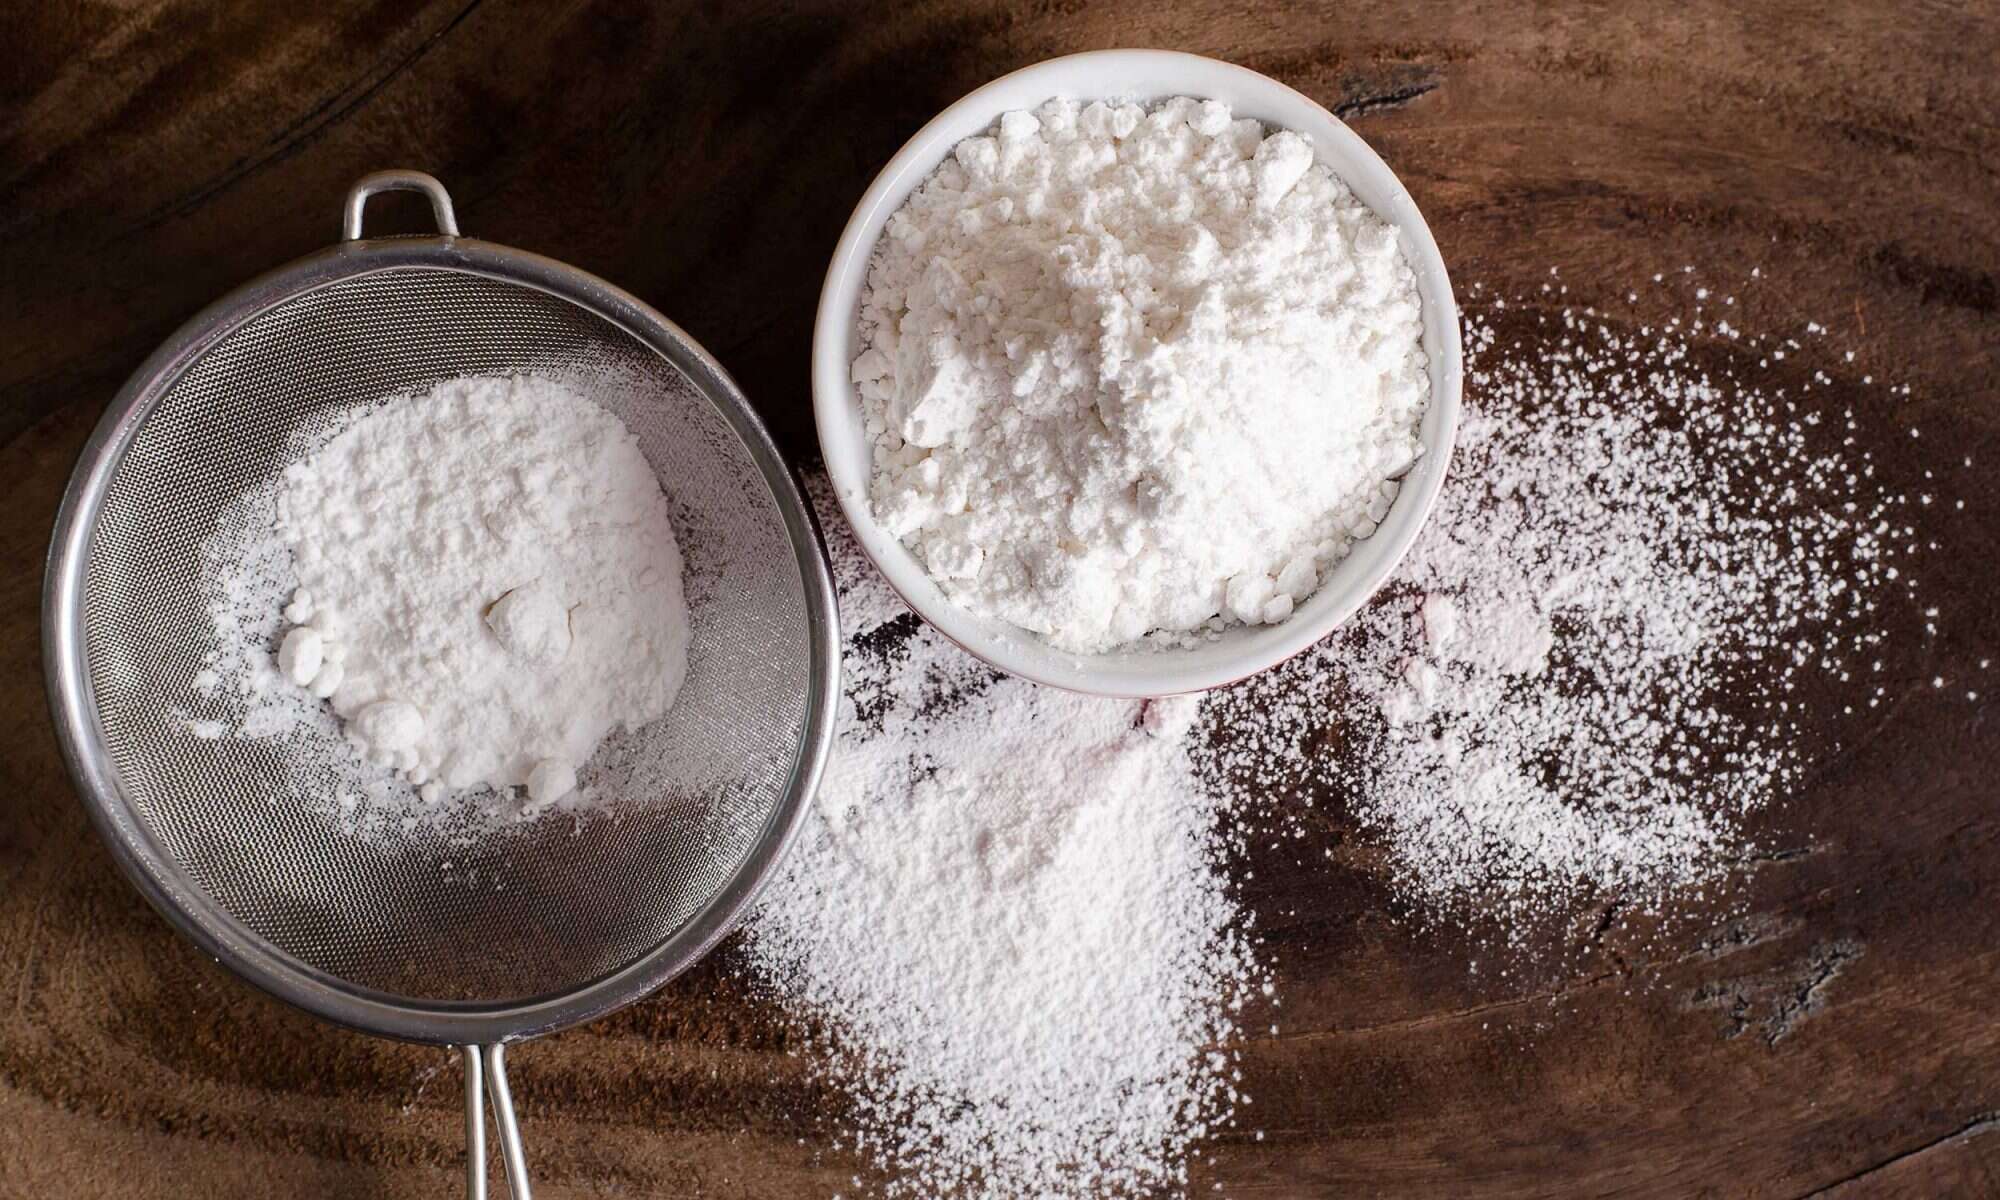 Does Baking Powder Go Bad?